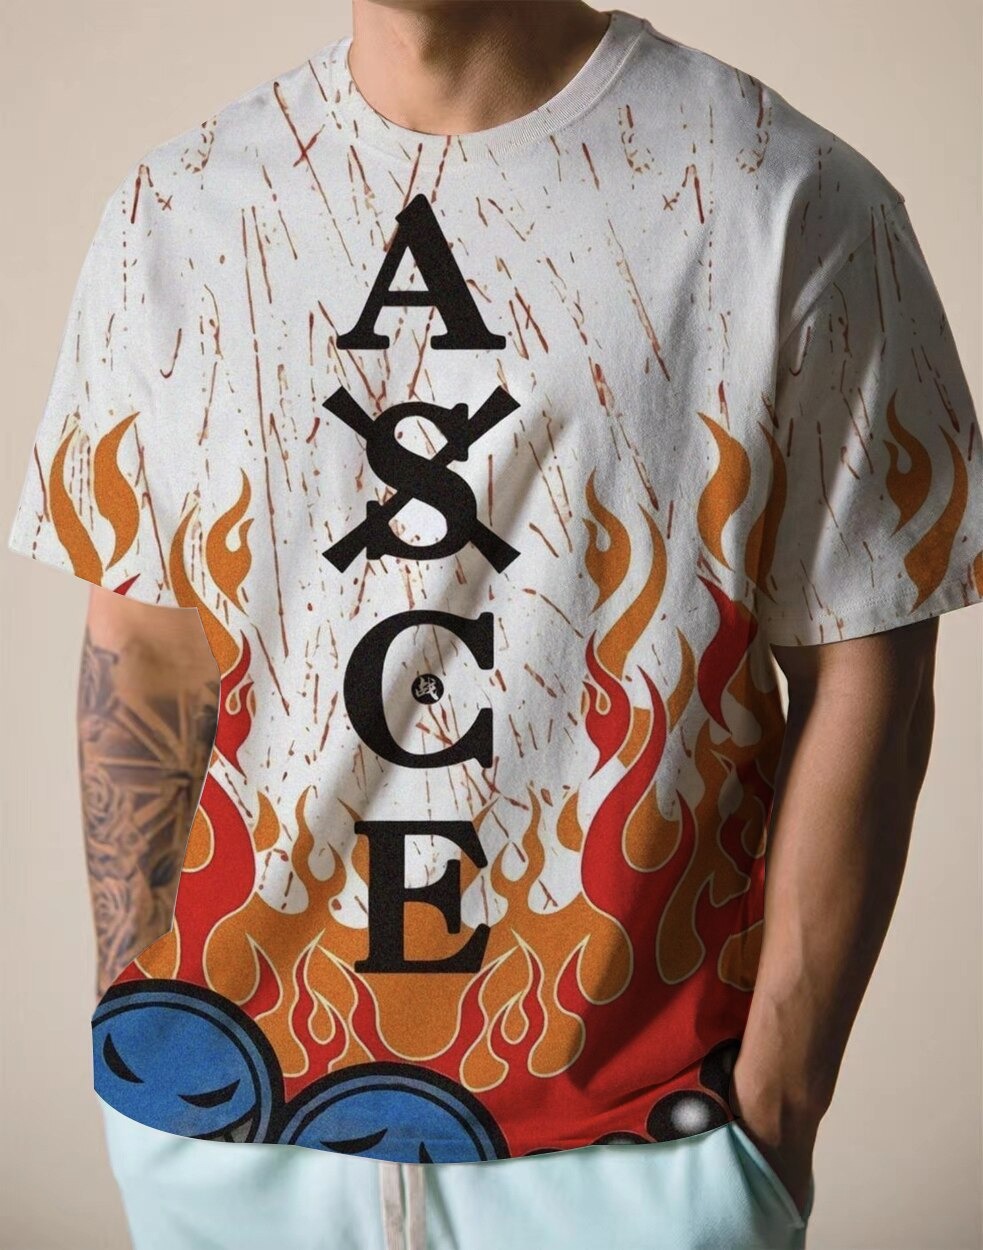 Portgas D ace one piece | Kids T-Shirt